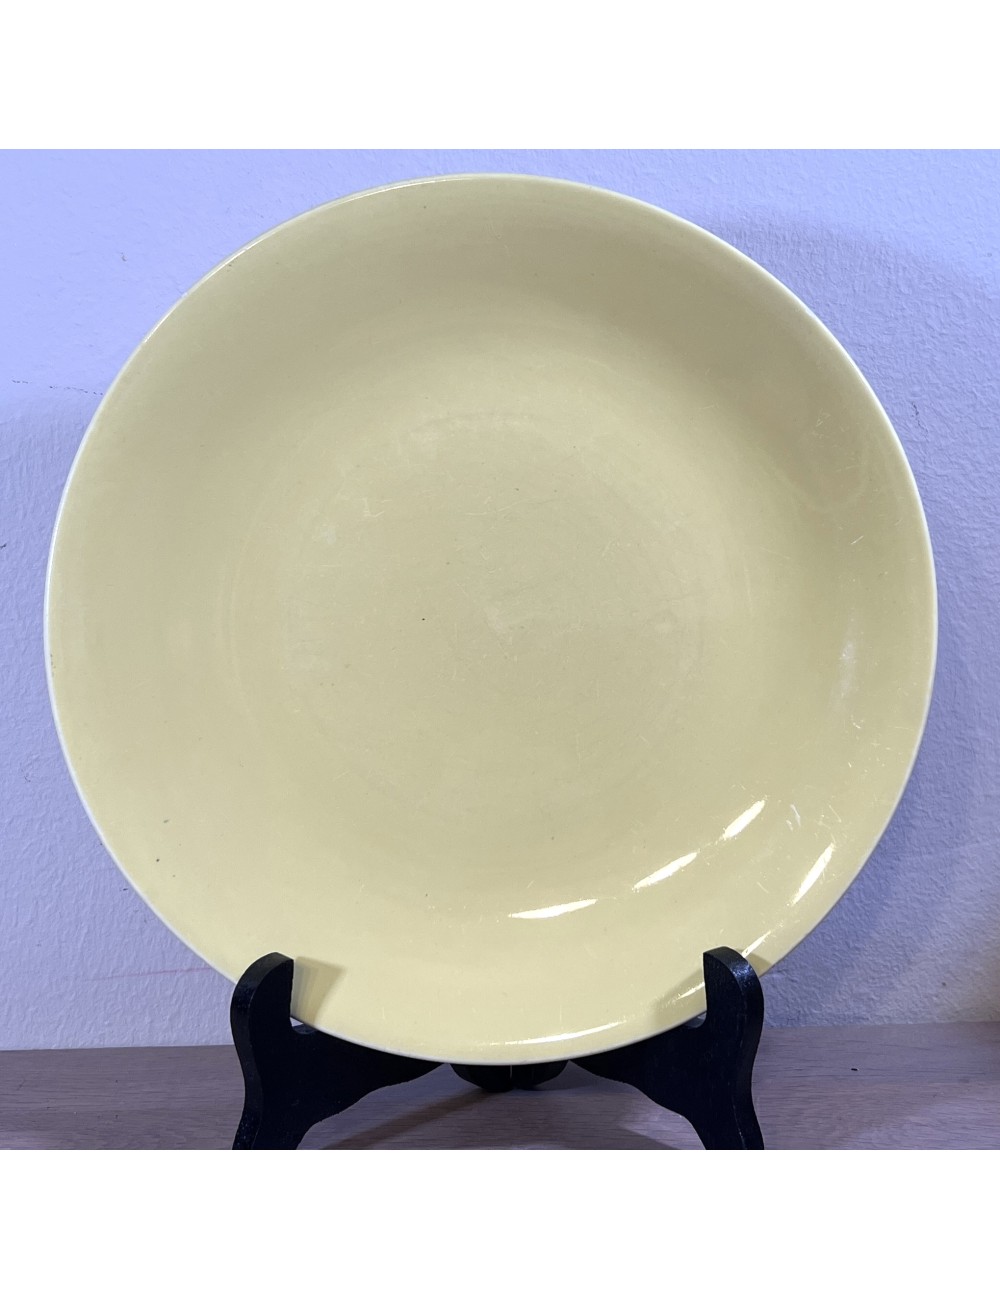 Dinner plate / Dinner plate - Boch - version in ochre yellow